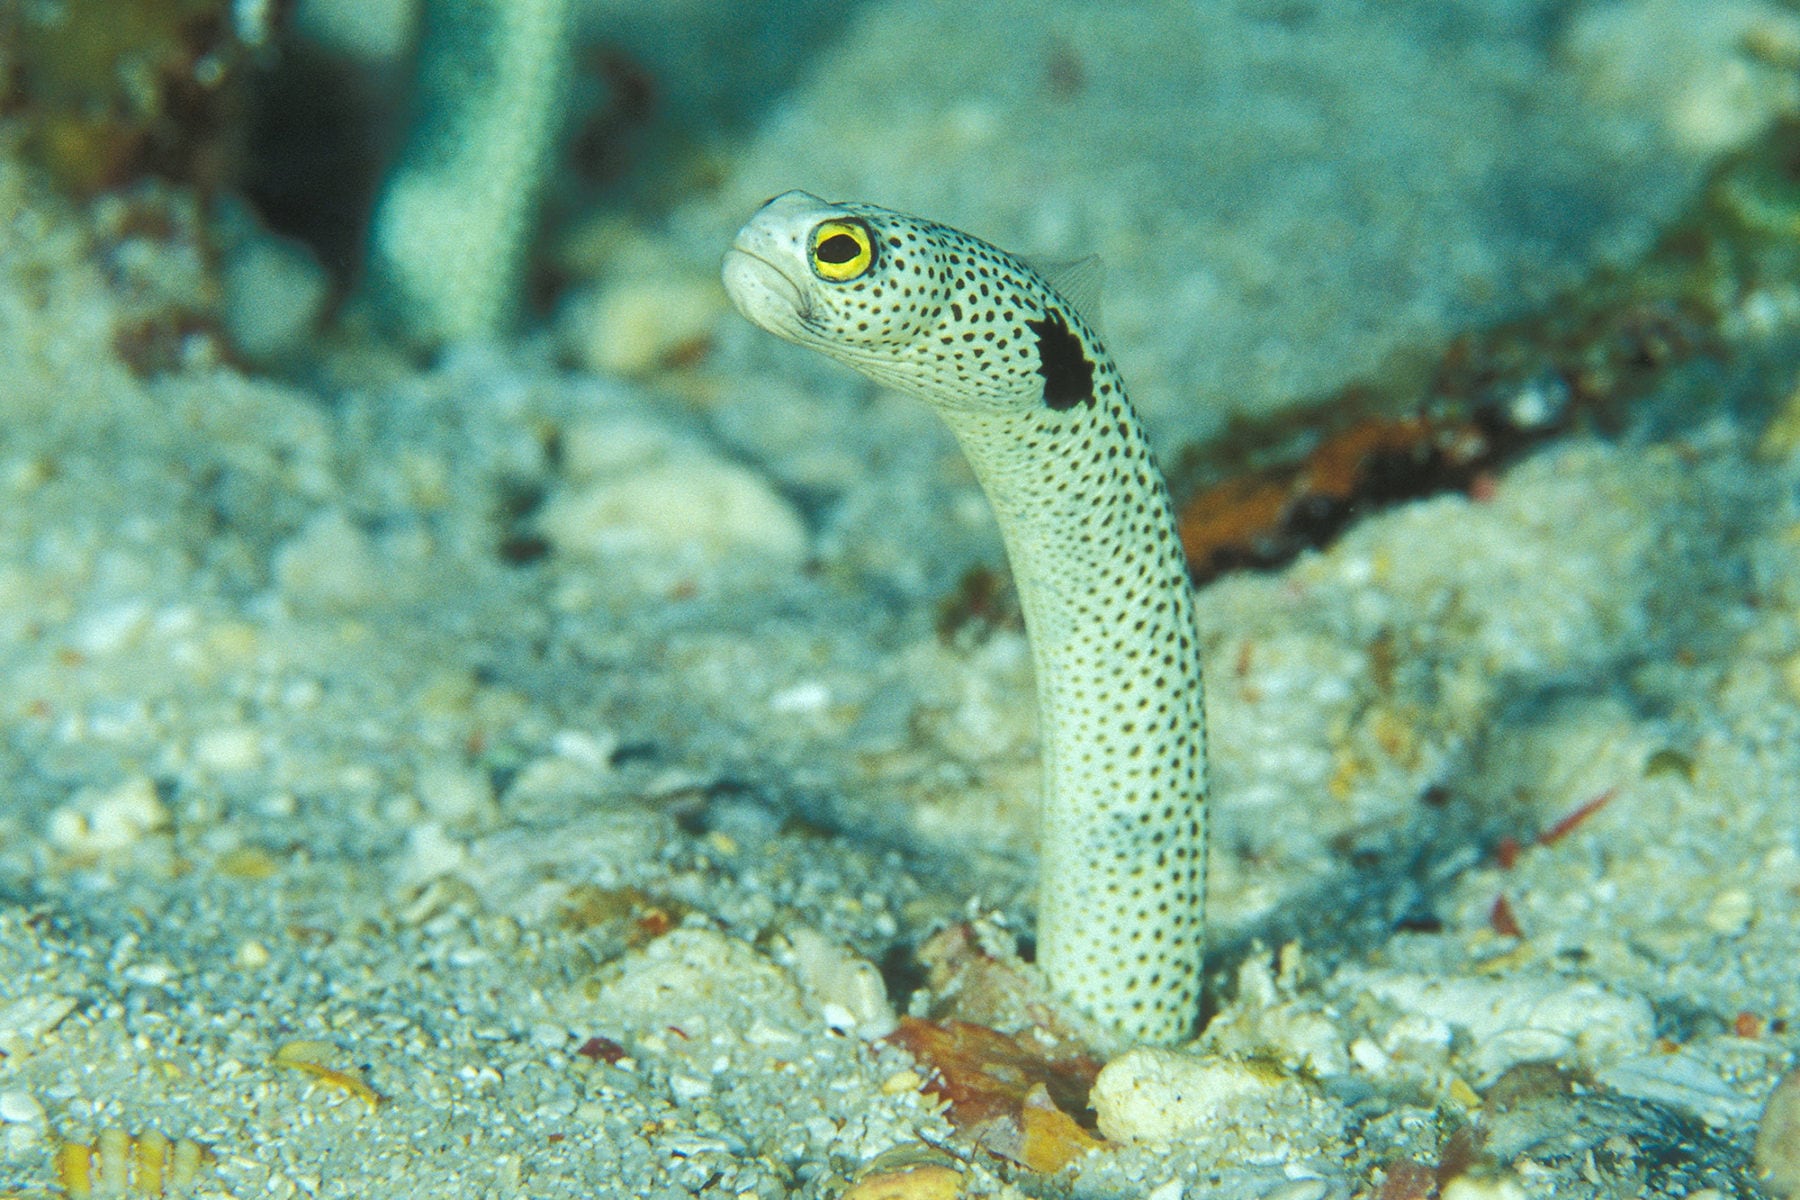 Spotted garden eels are mean little divas - Australian Geographic